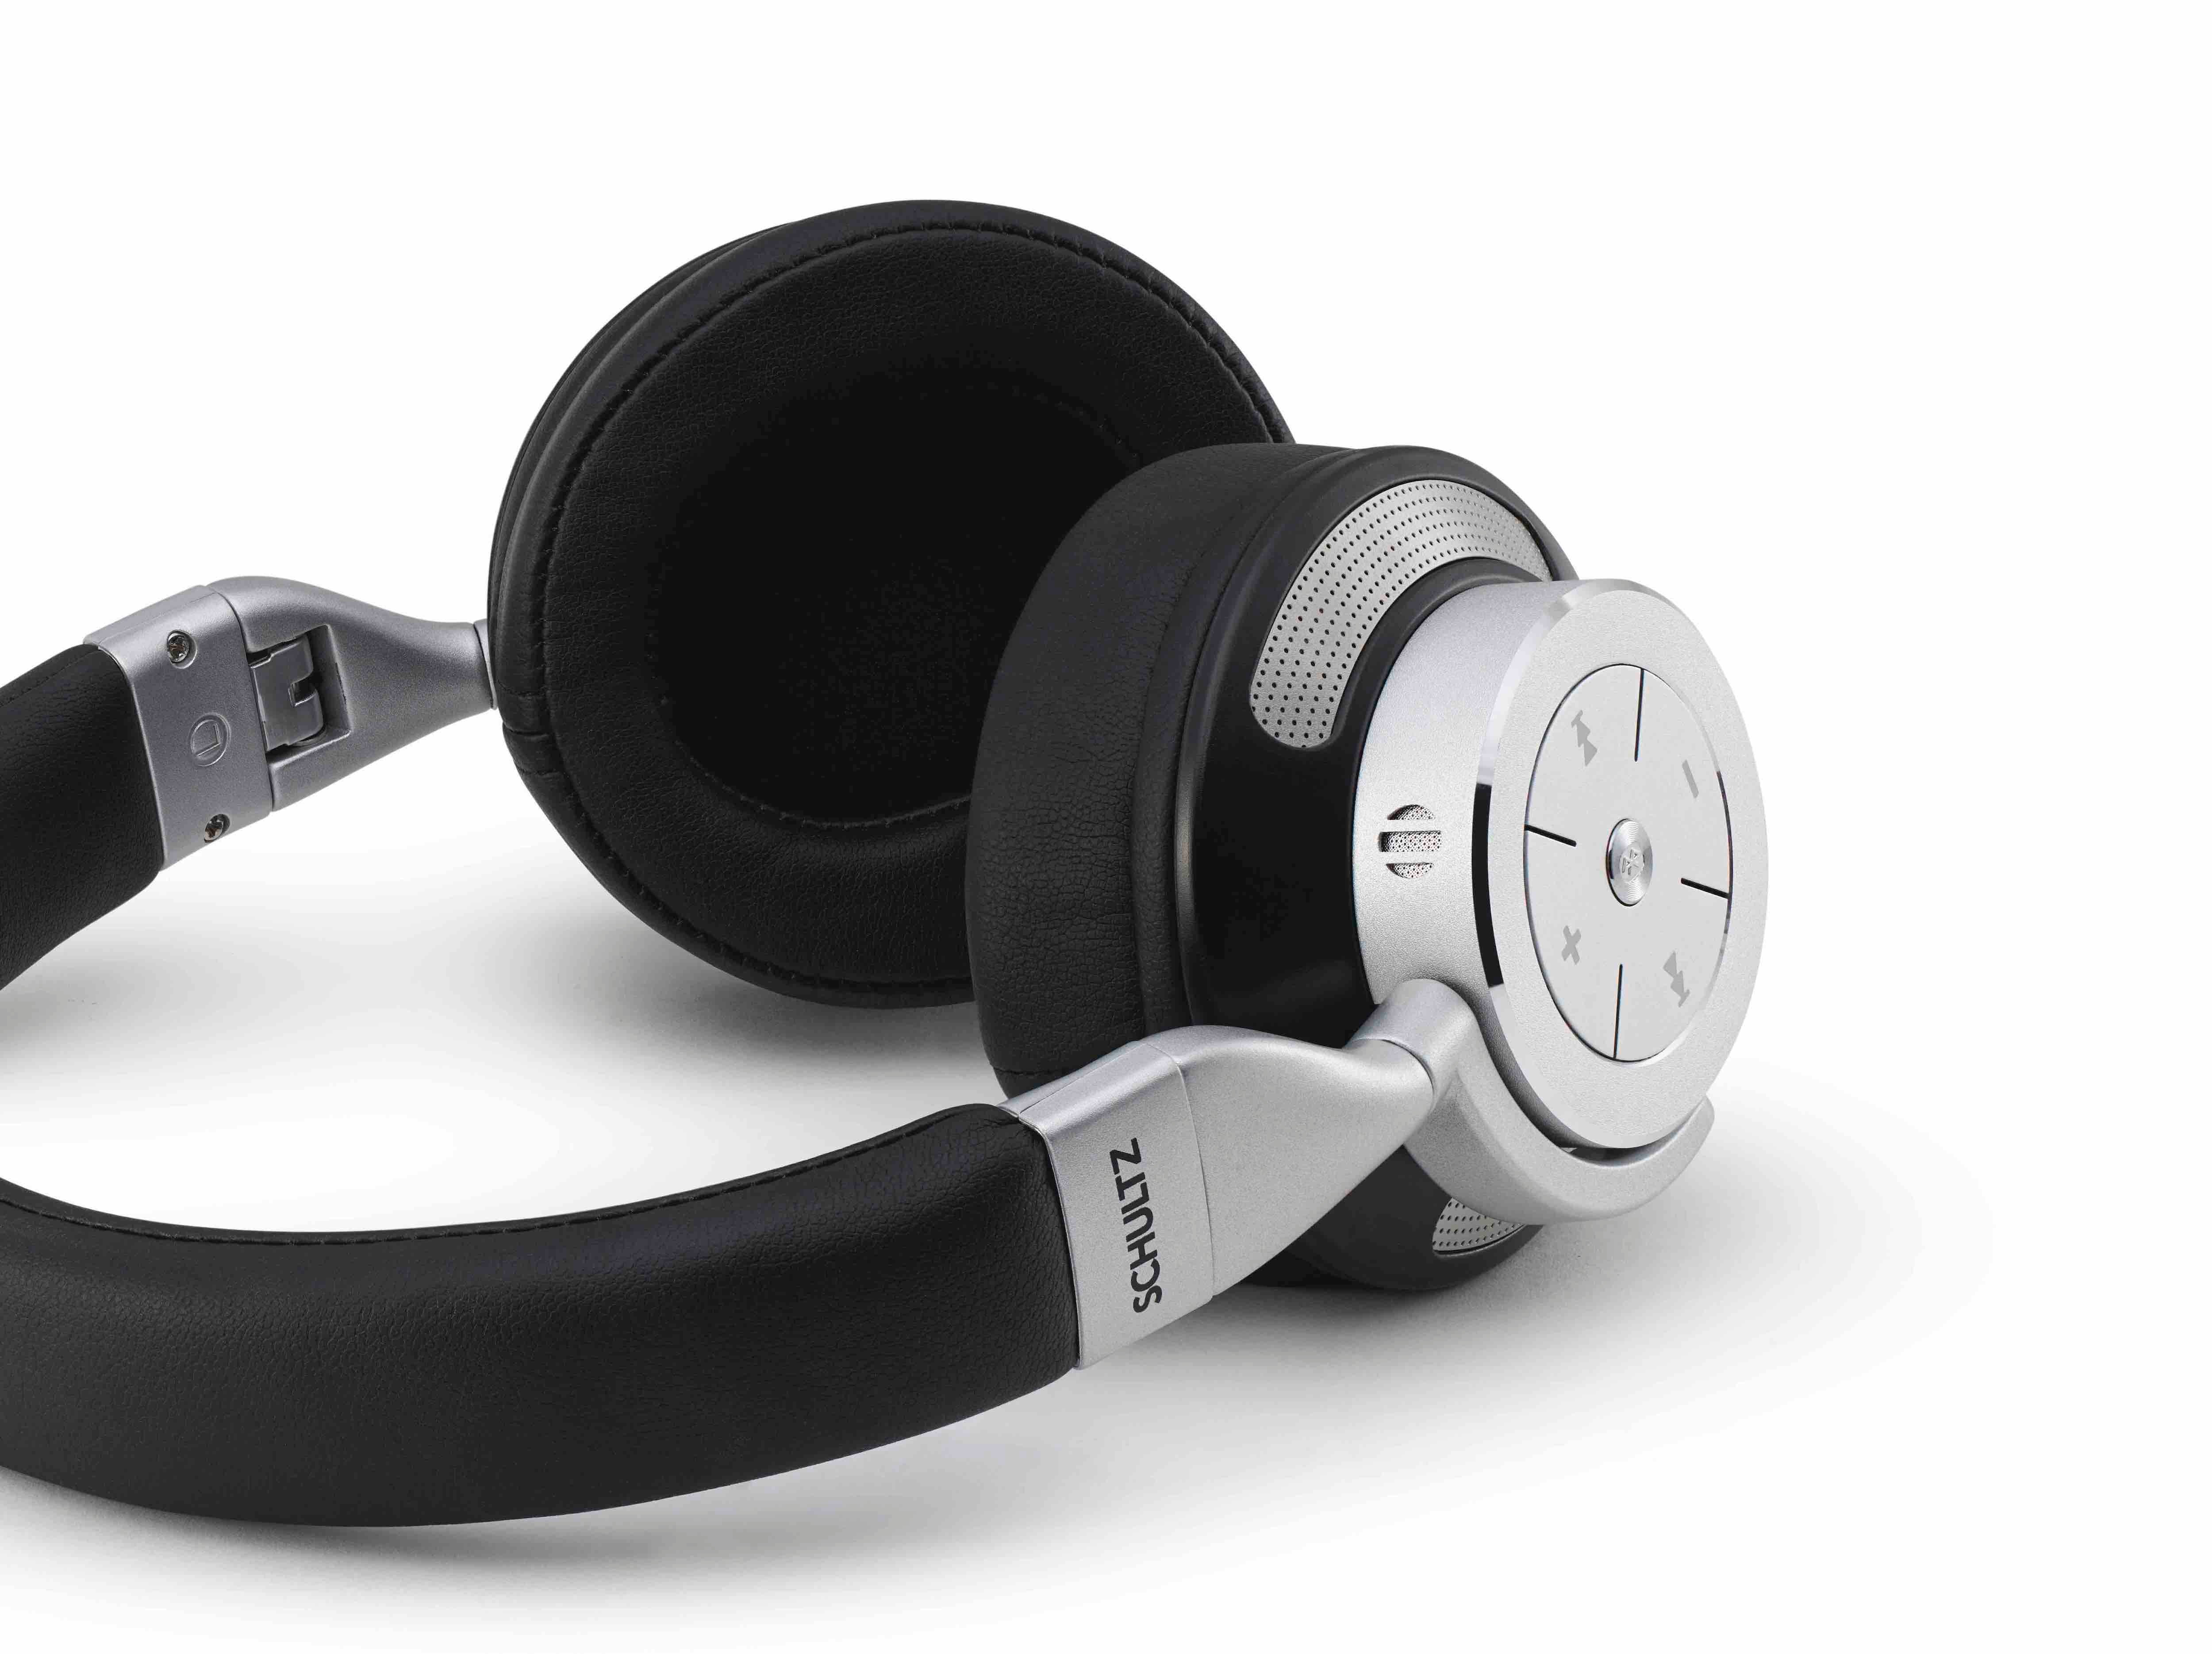 Schultz Q-Tech Wireless & Noise Canceling Headphones